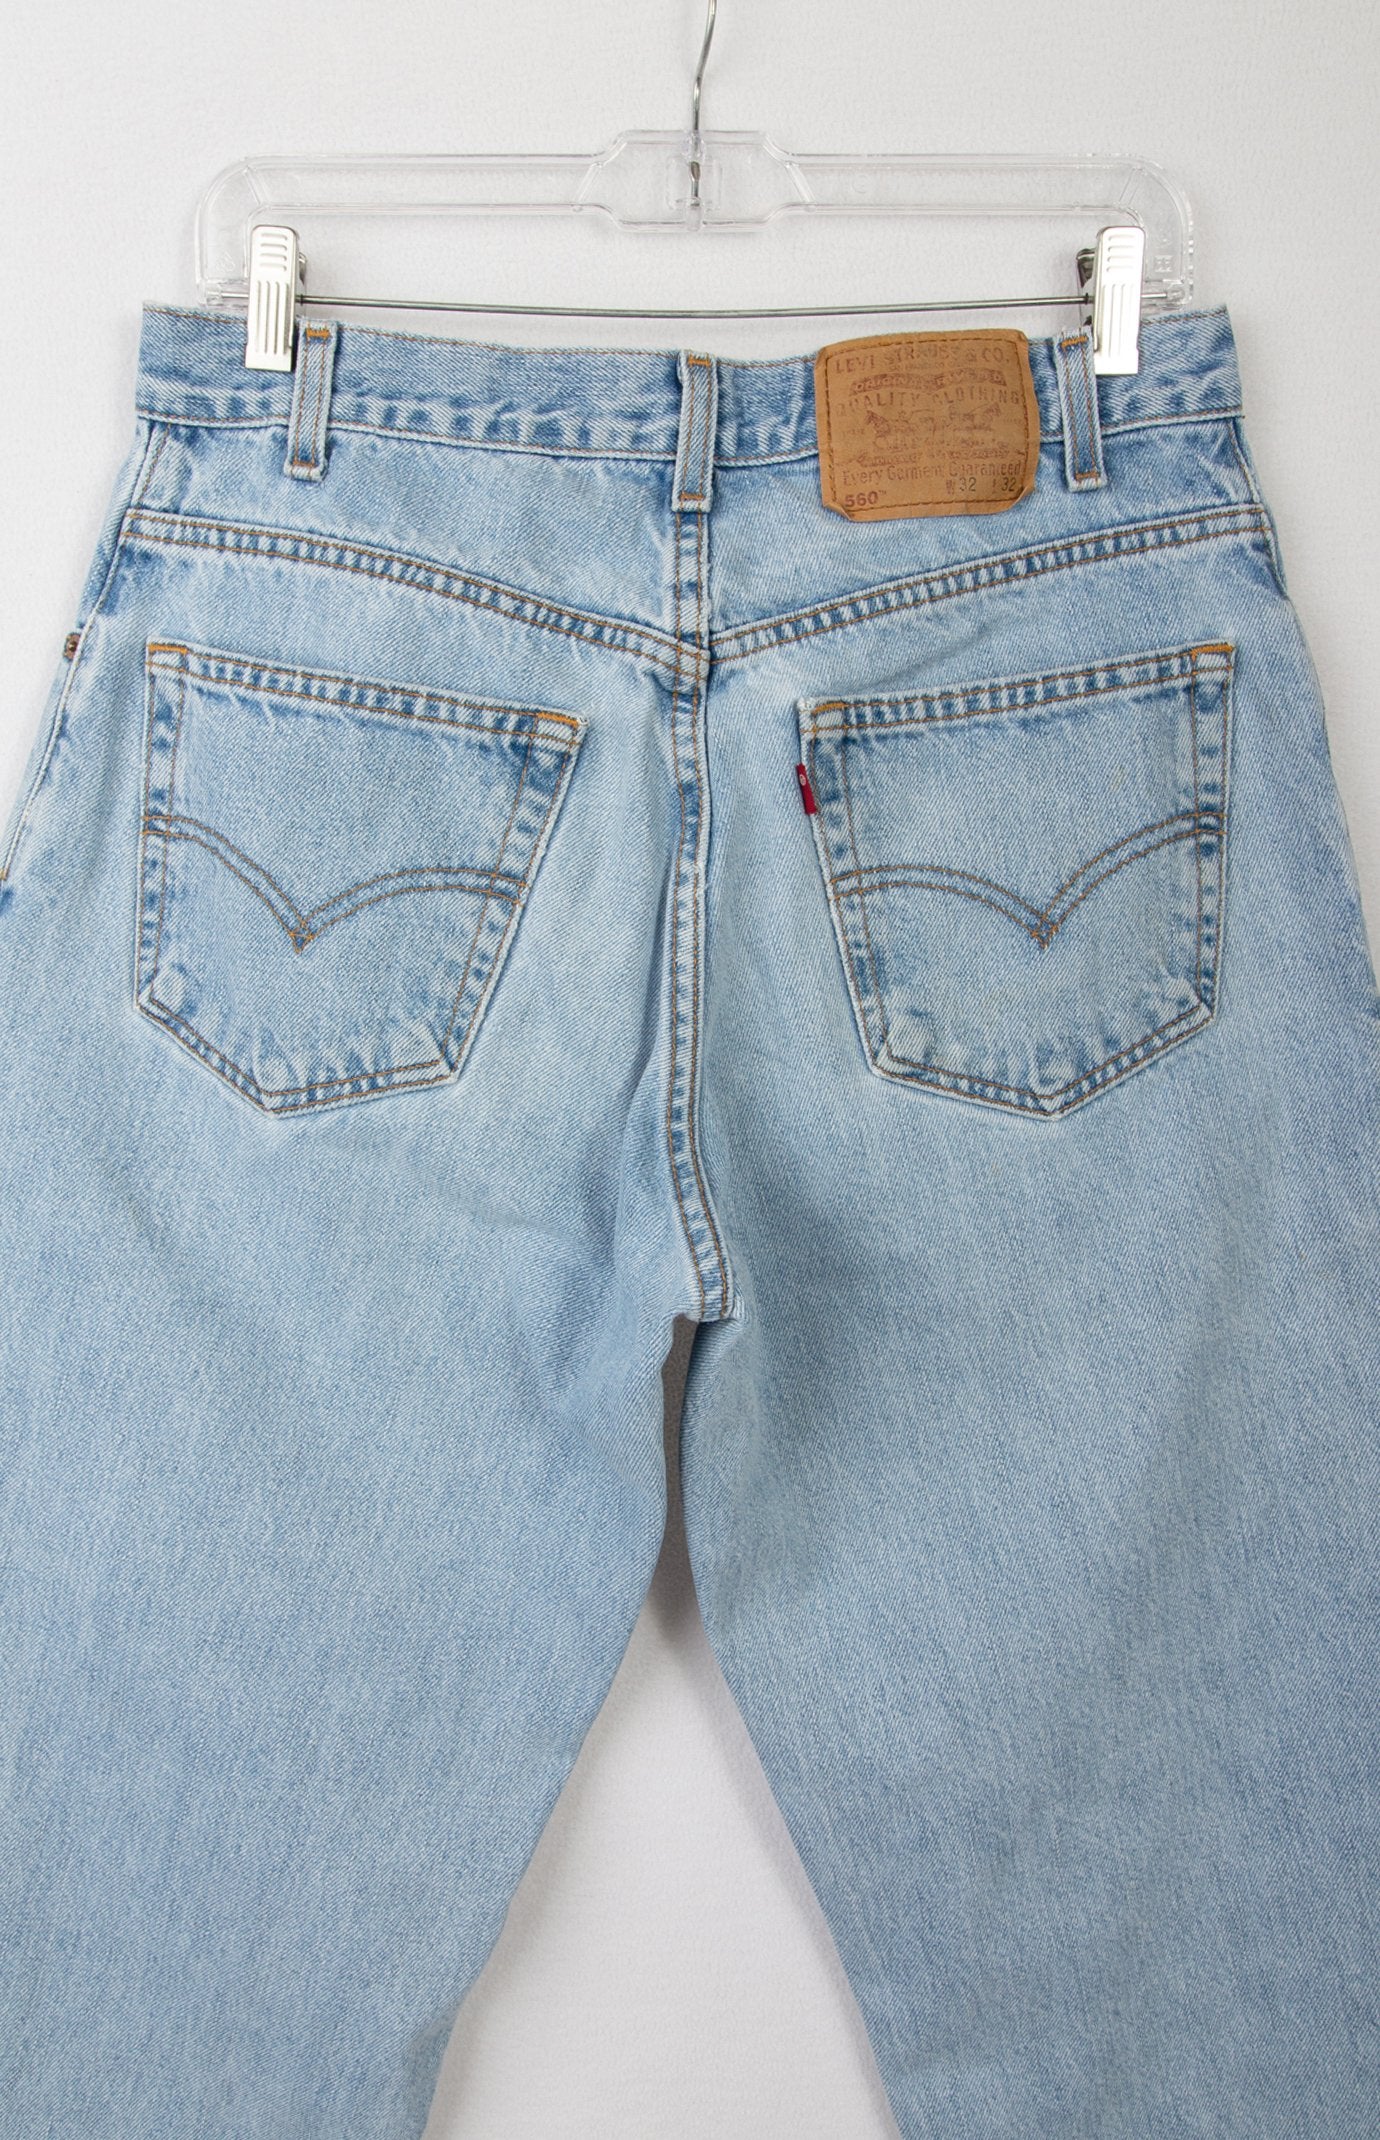 tvivl Klassifikation svinge Levi's 560 Jeans | Vintage Levis Jeans | GOAT Vintage